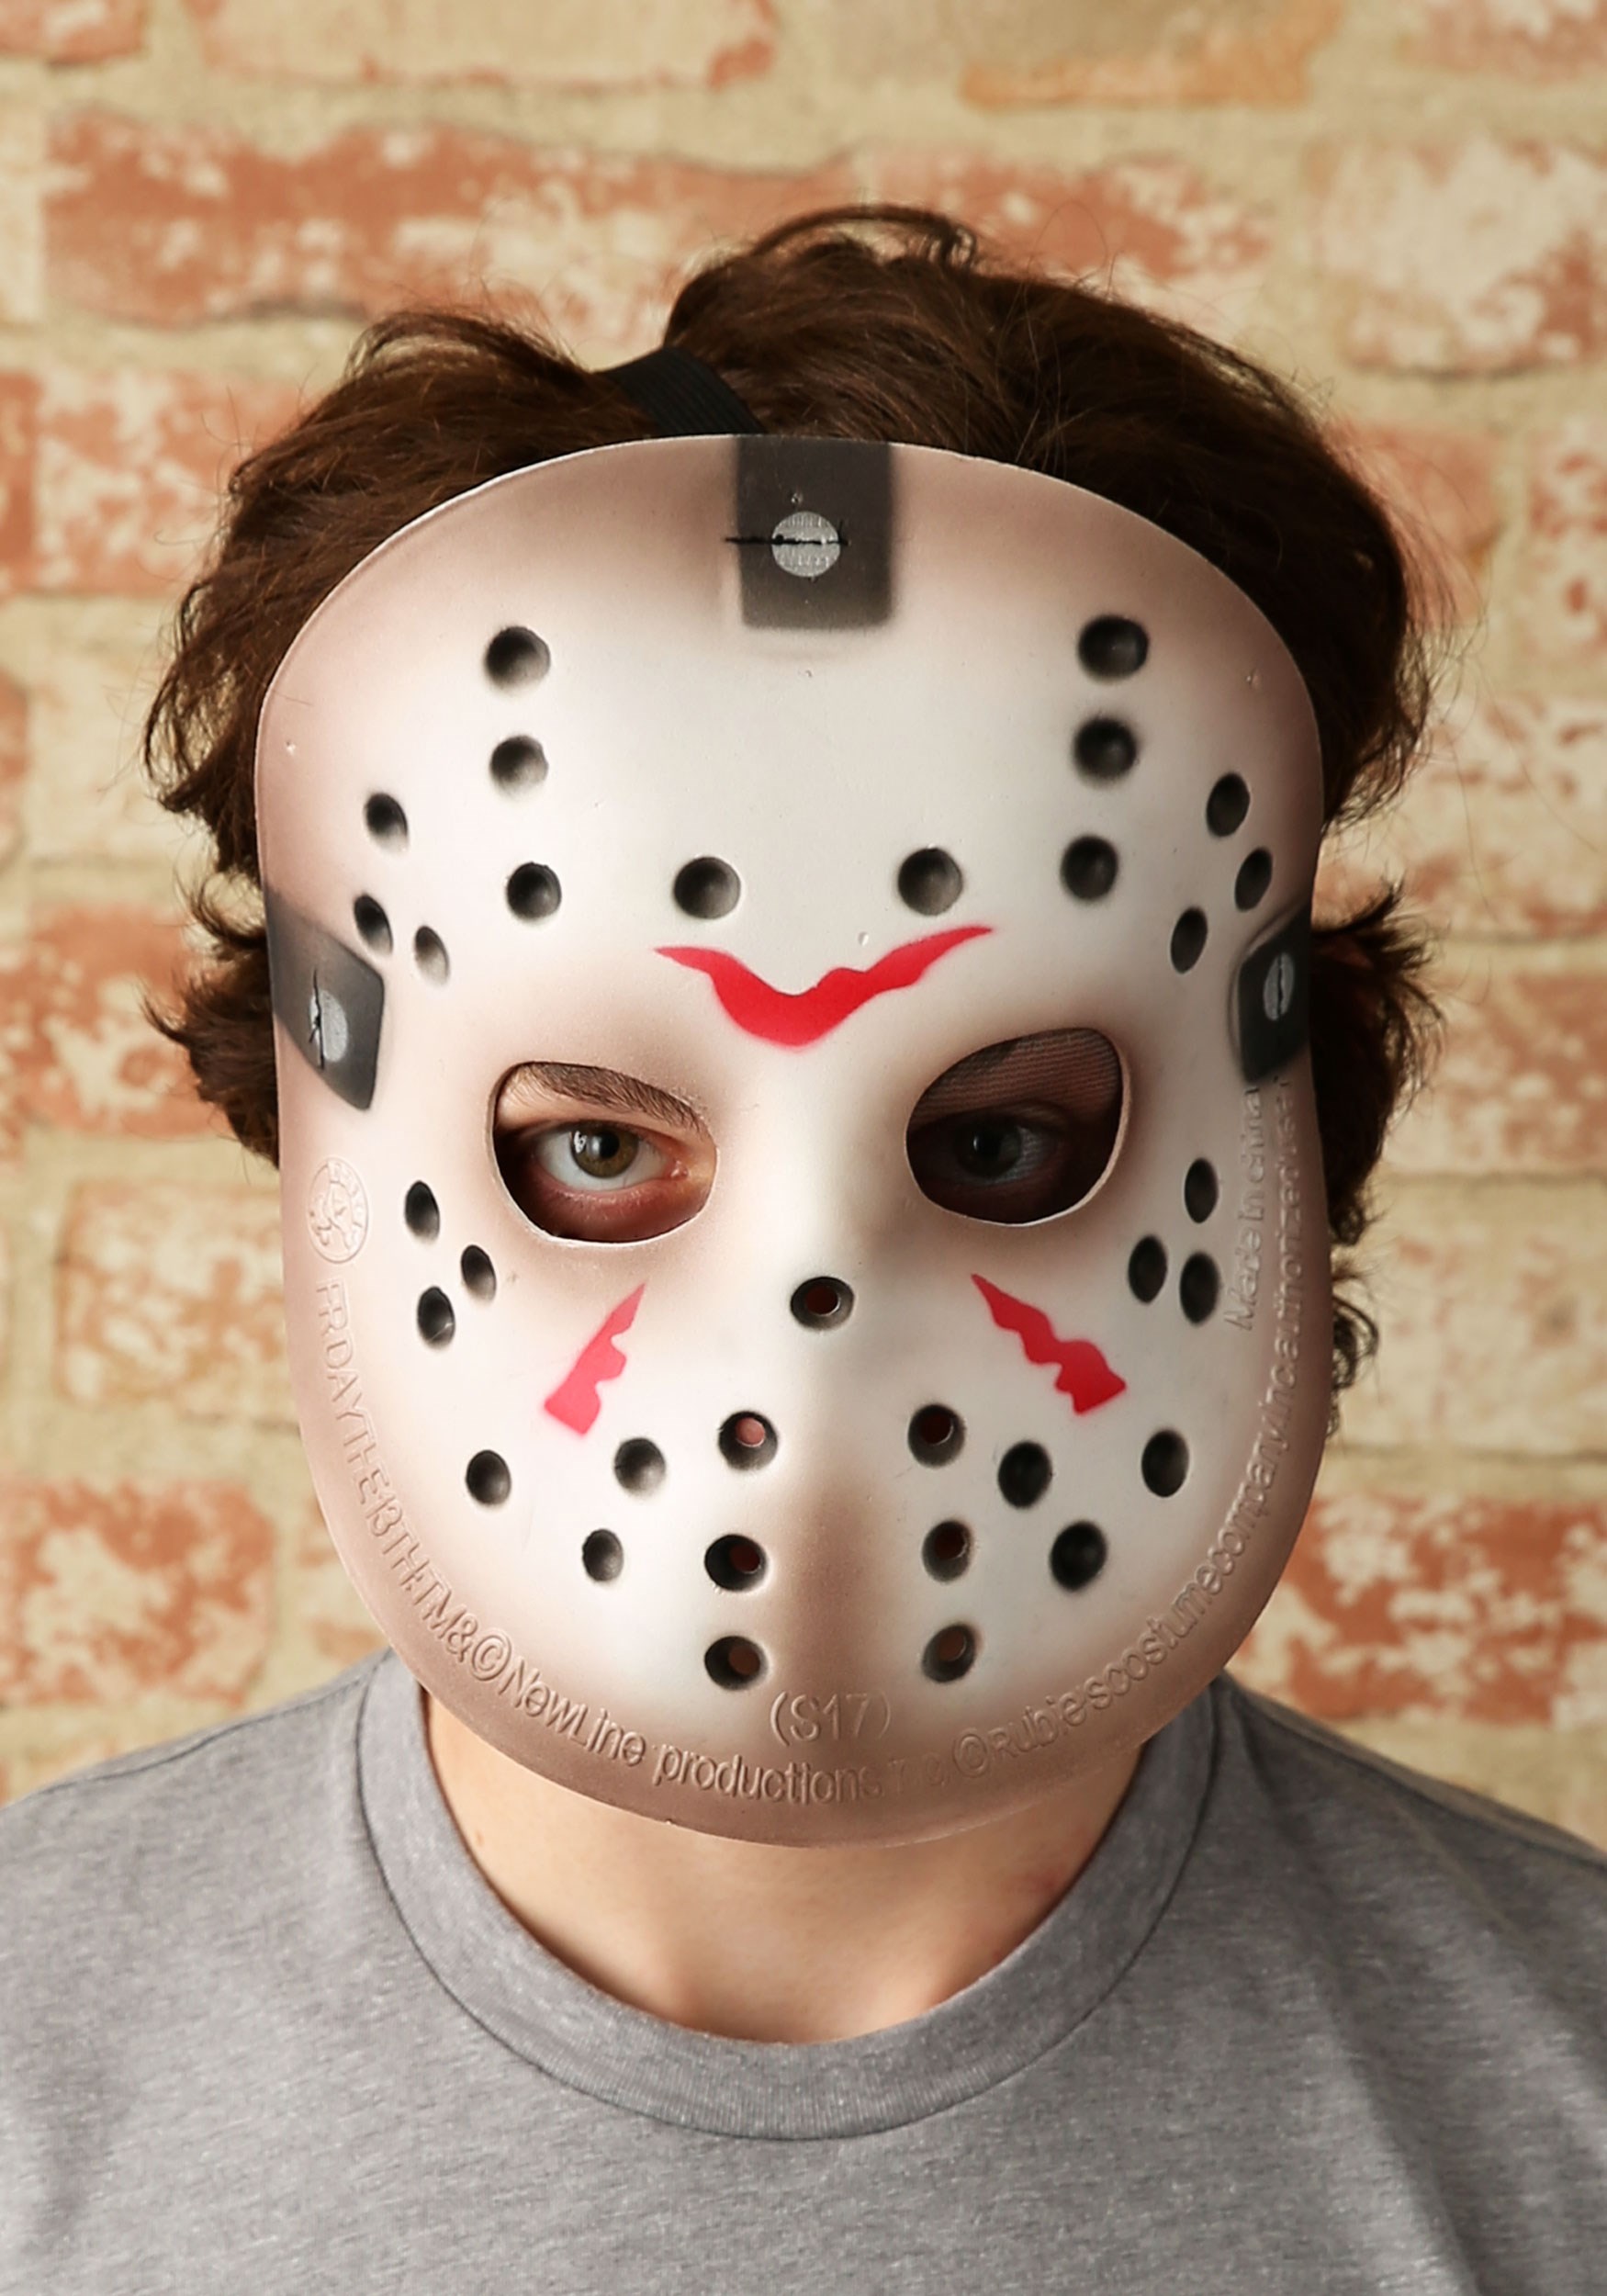 New Jason Voorhees Halloween Mask Friday The 13th Hockey